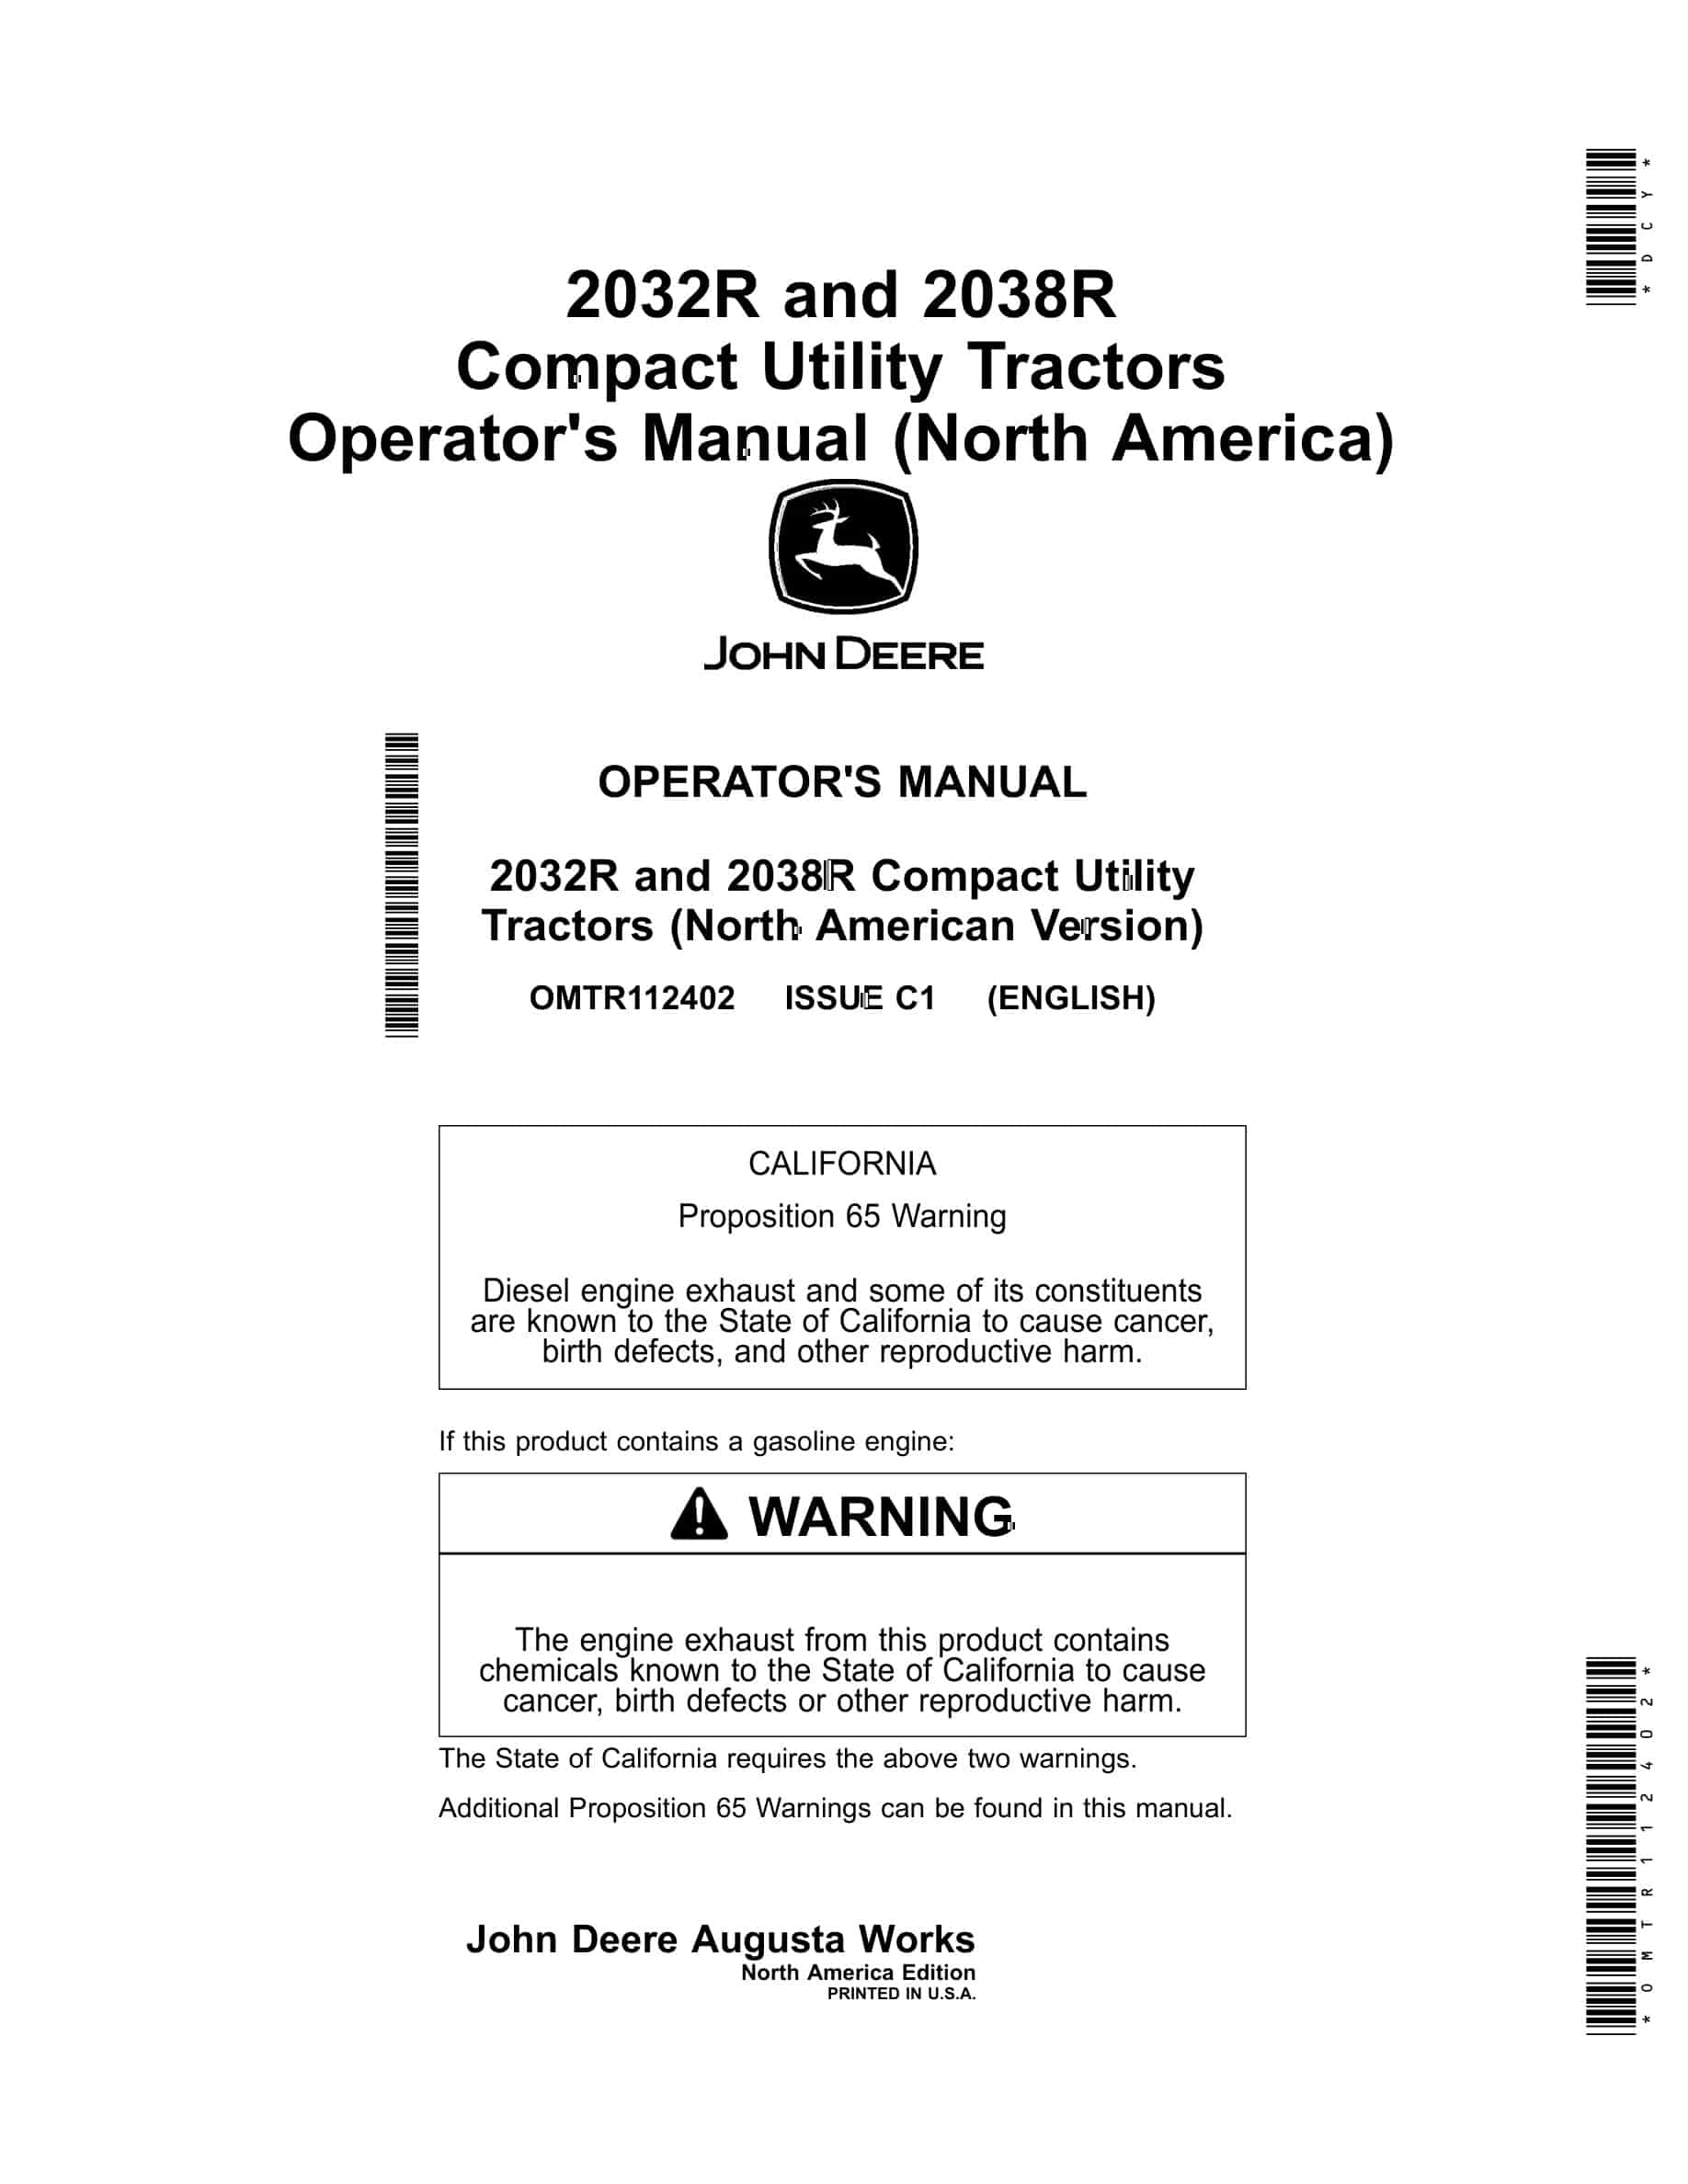 John Deere 2032R and 2038R Tractor Operator Manual OMTR112402-1